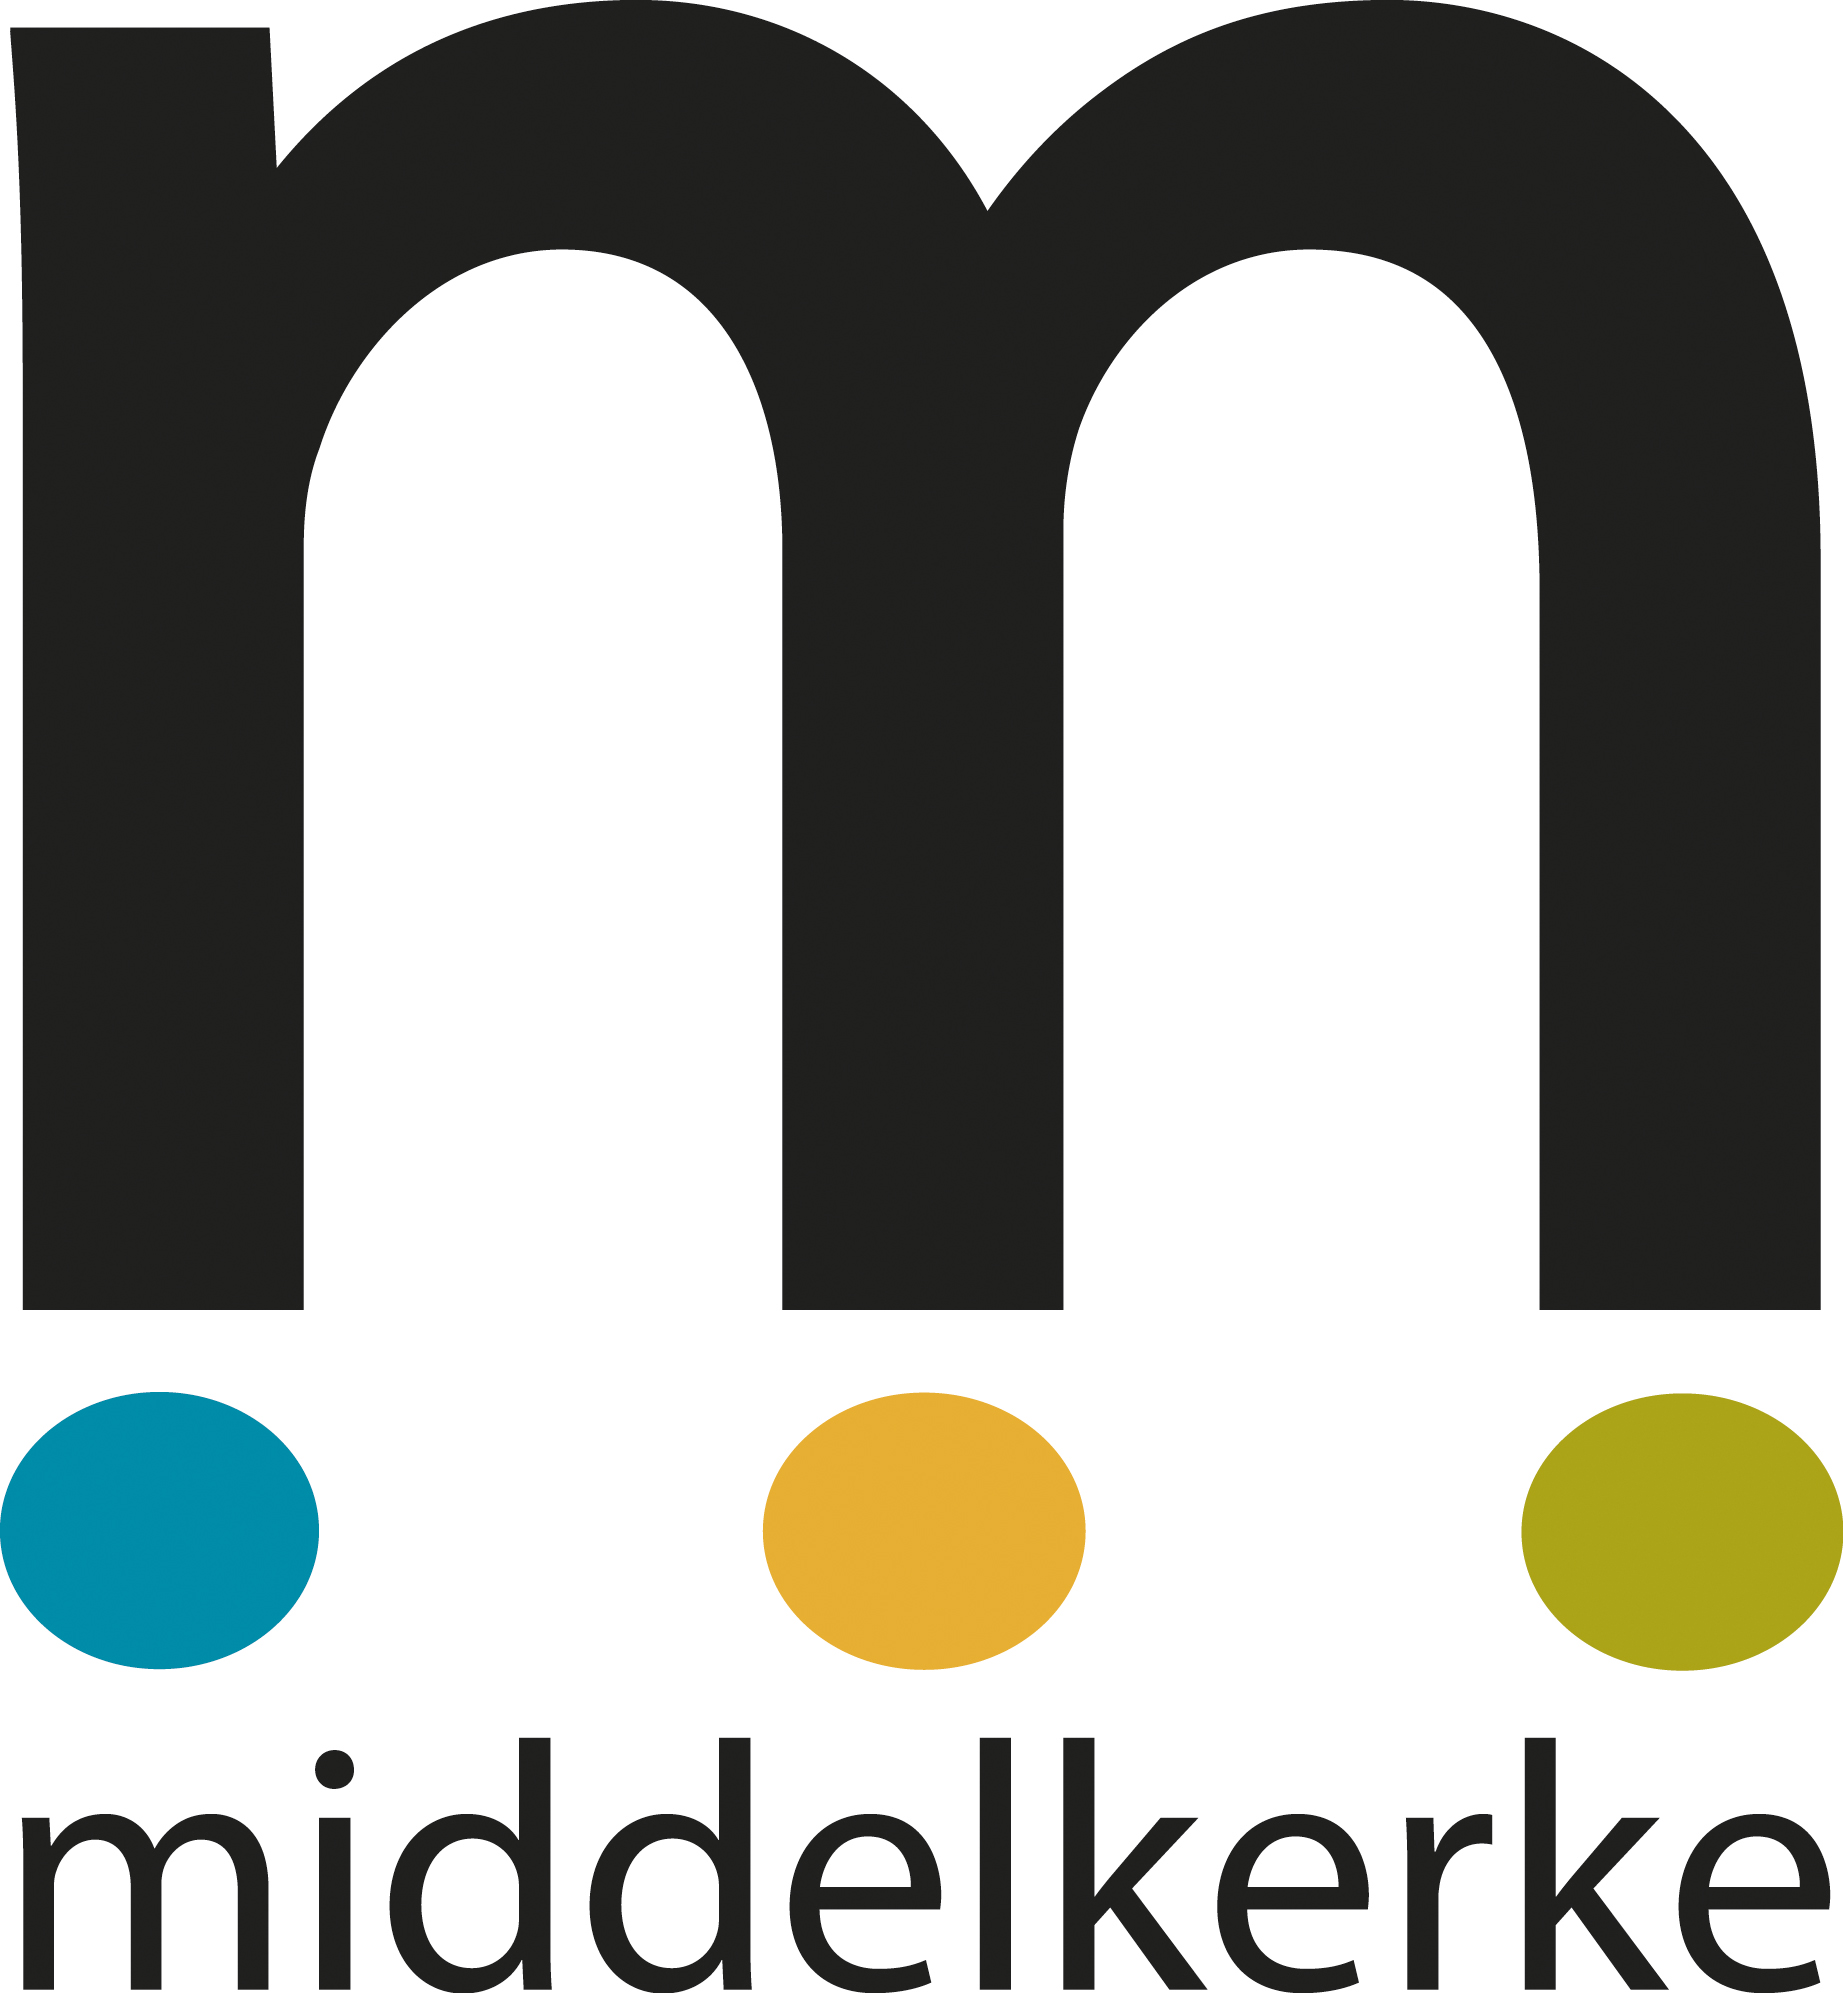 Municipality of Middelkerke 